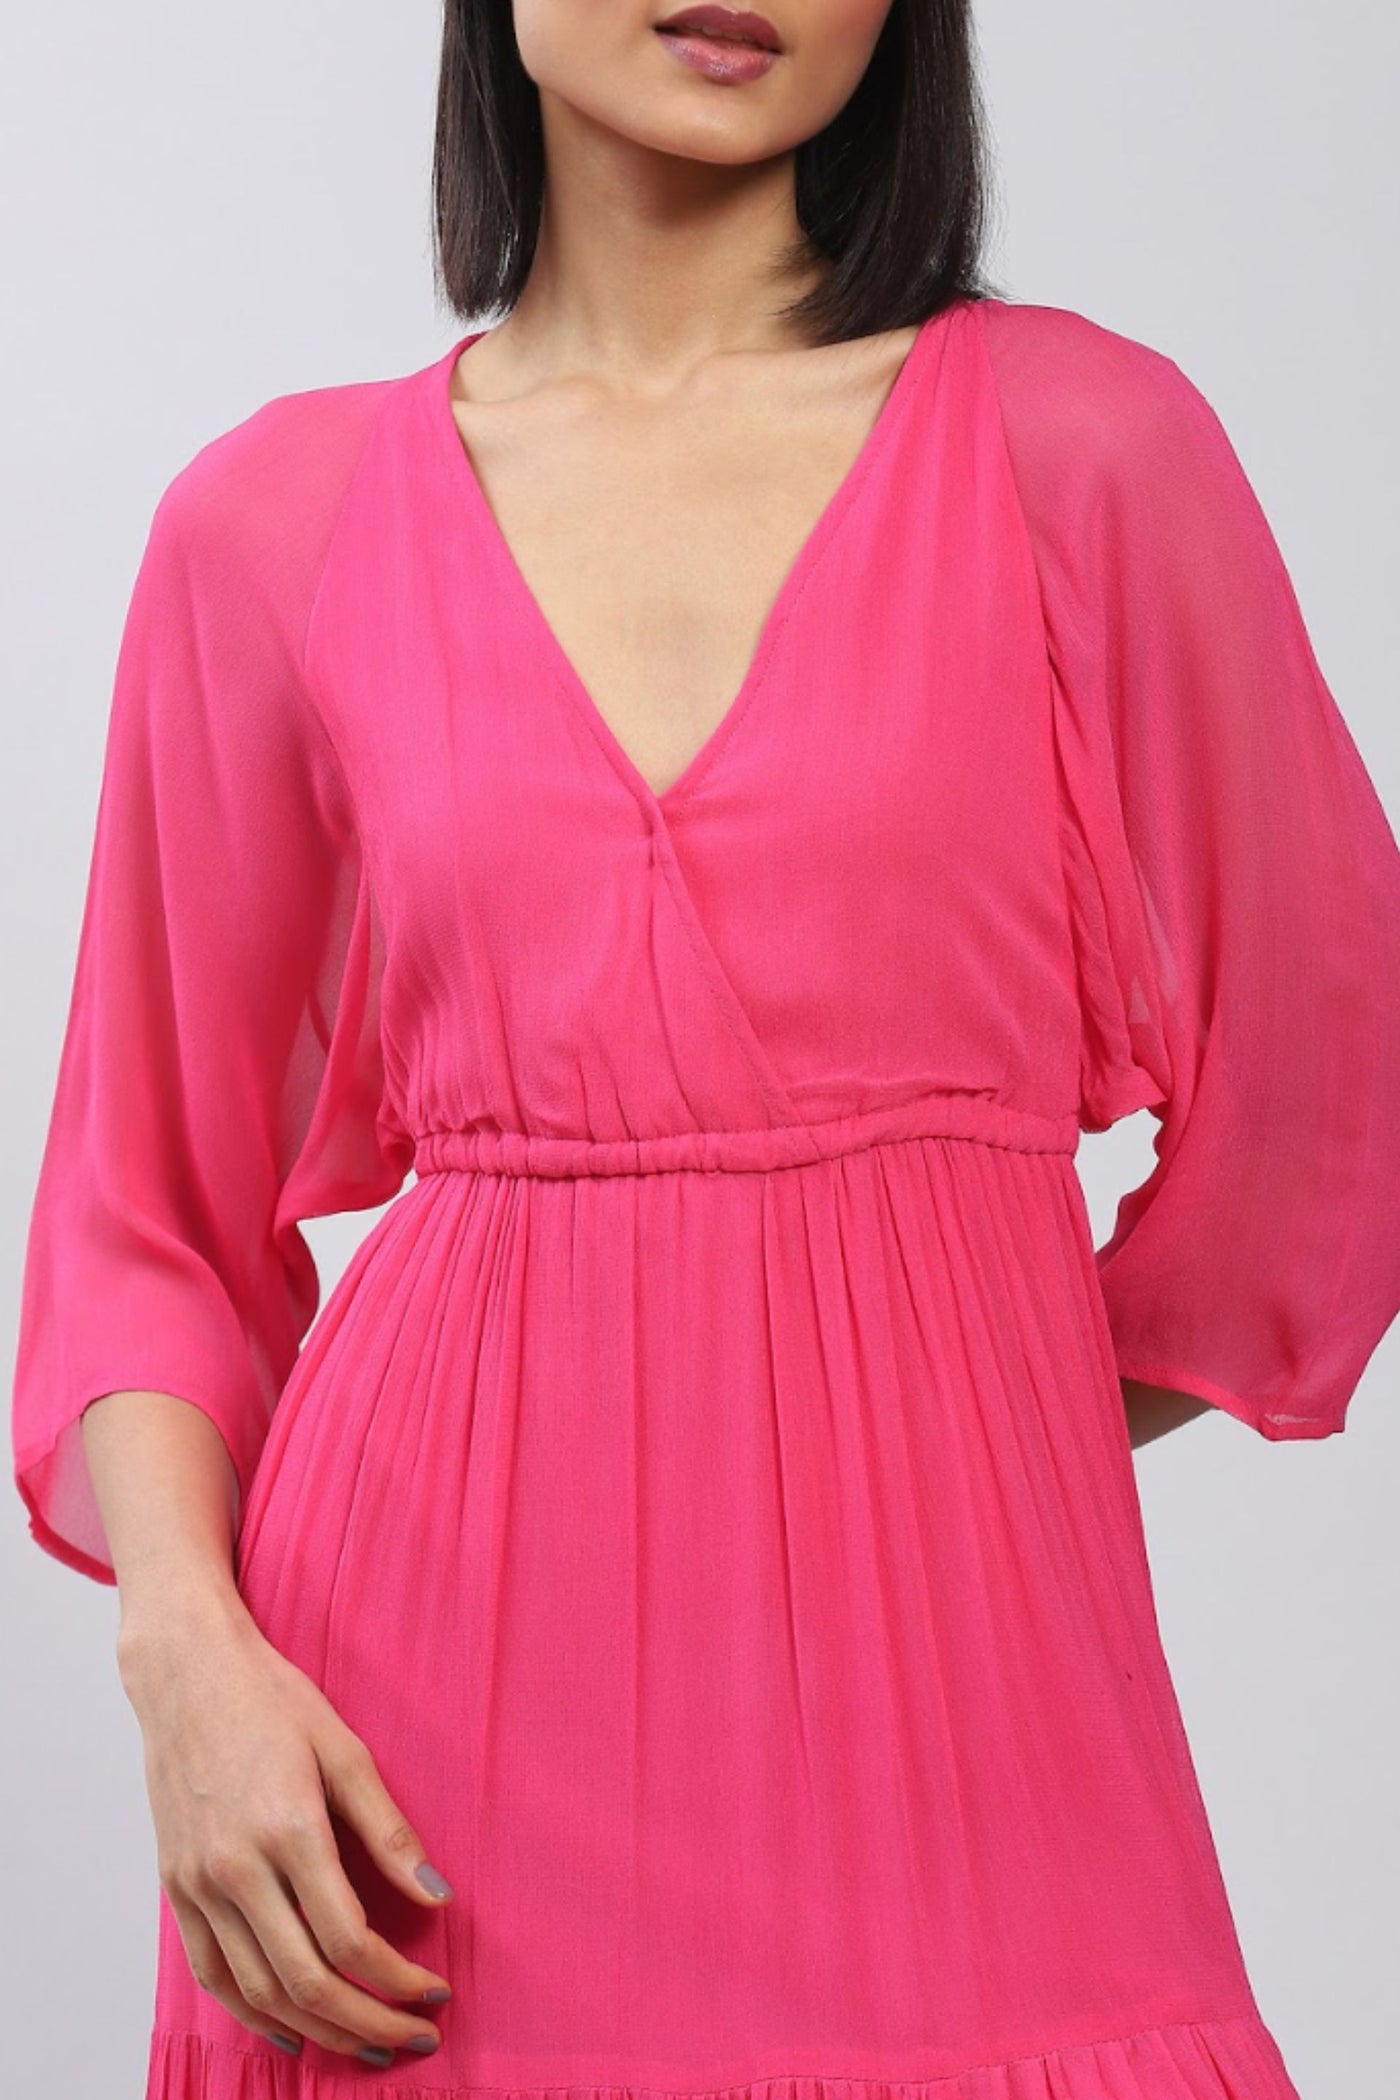 Label Ritu Kumar Fuchsia Pink Maxi Dress with Tiers Indian designer wear online shopping melange singapore